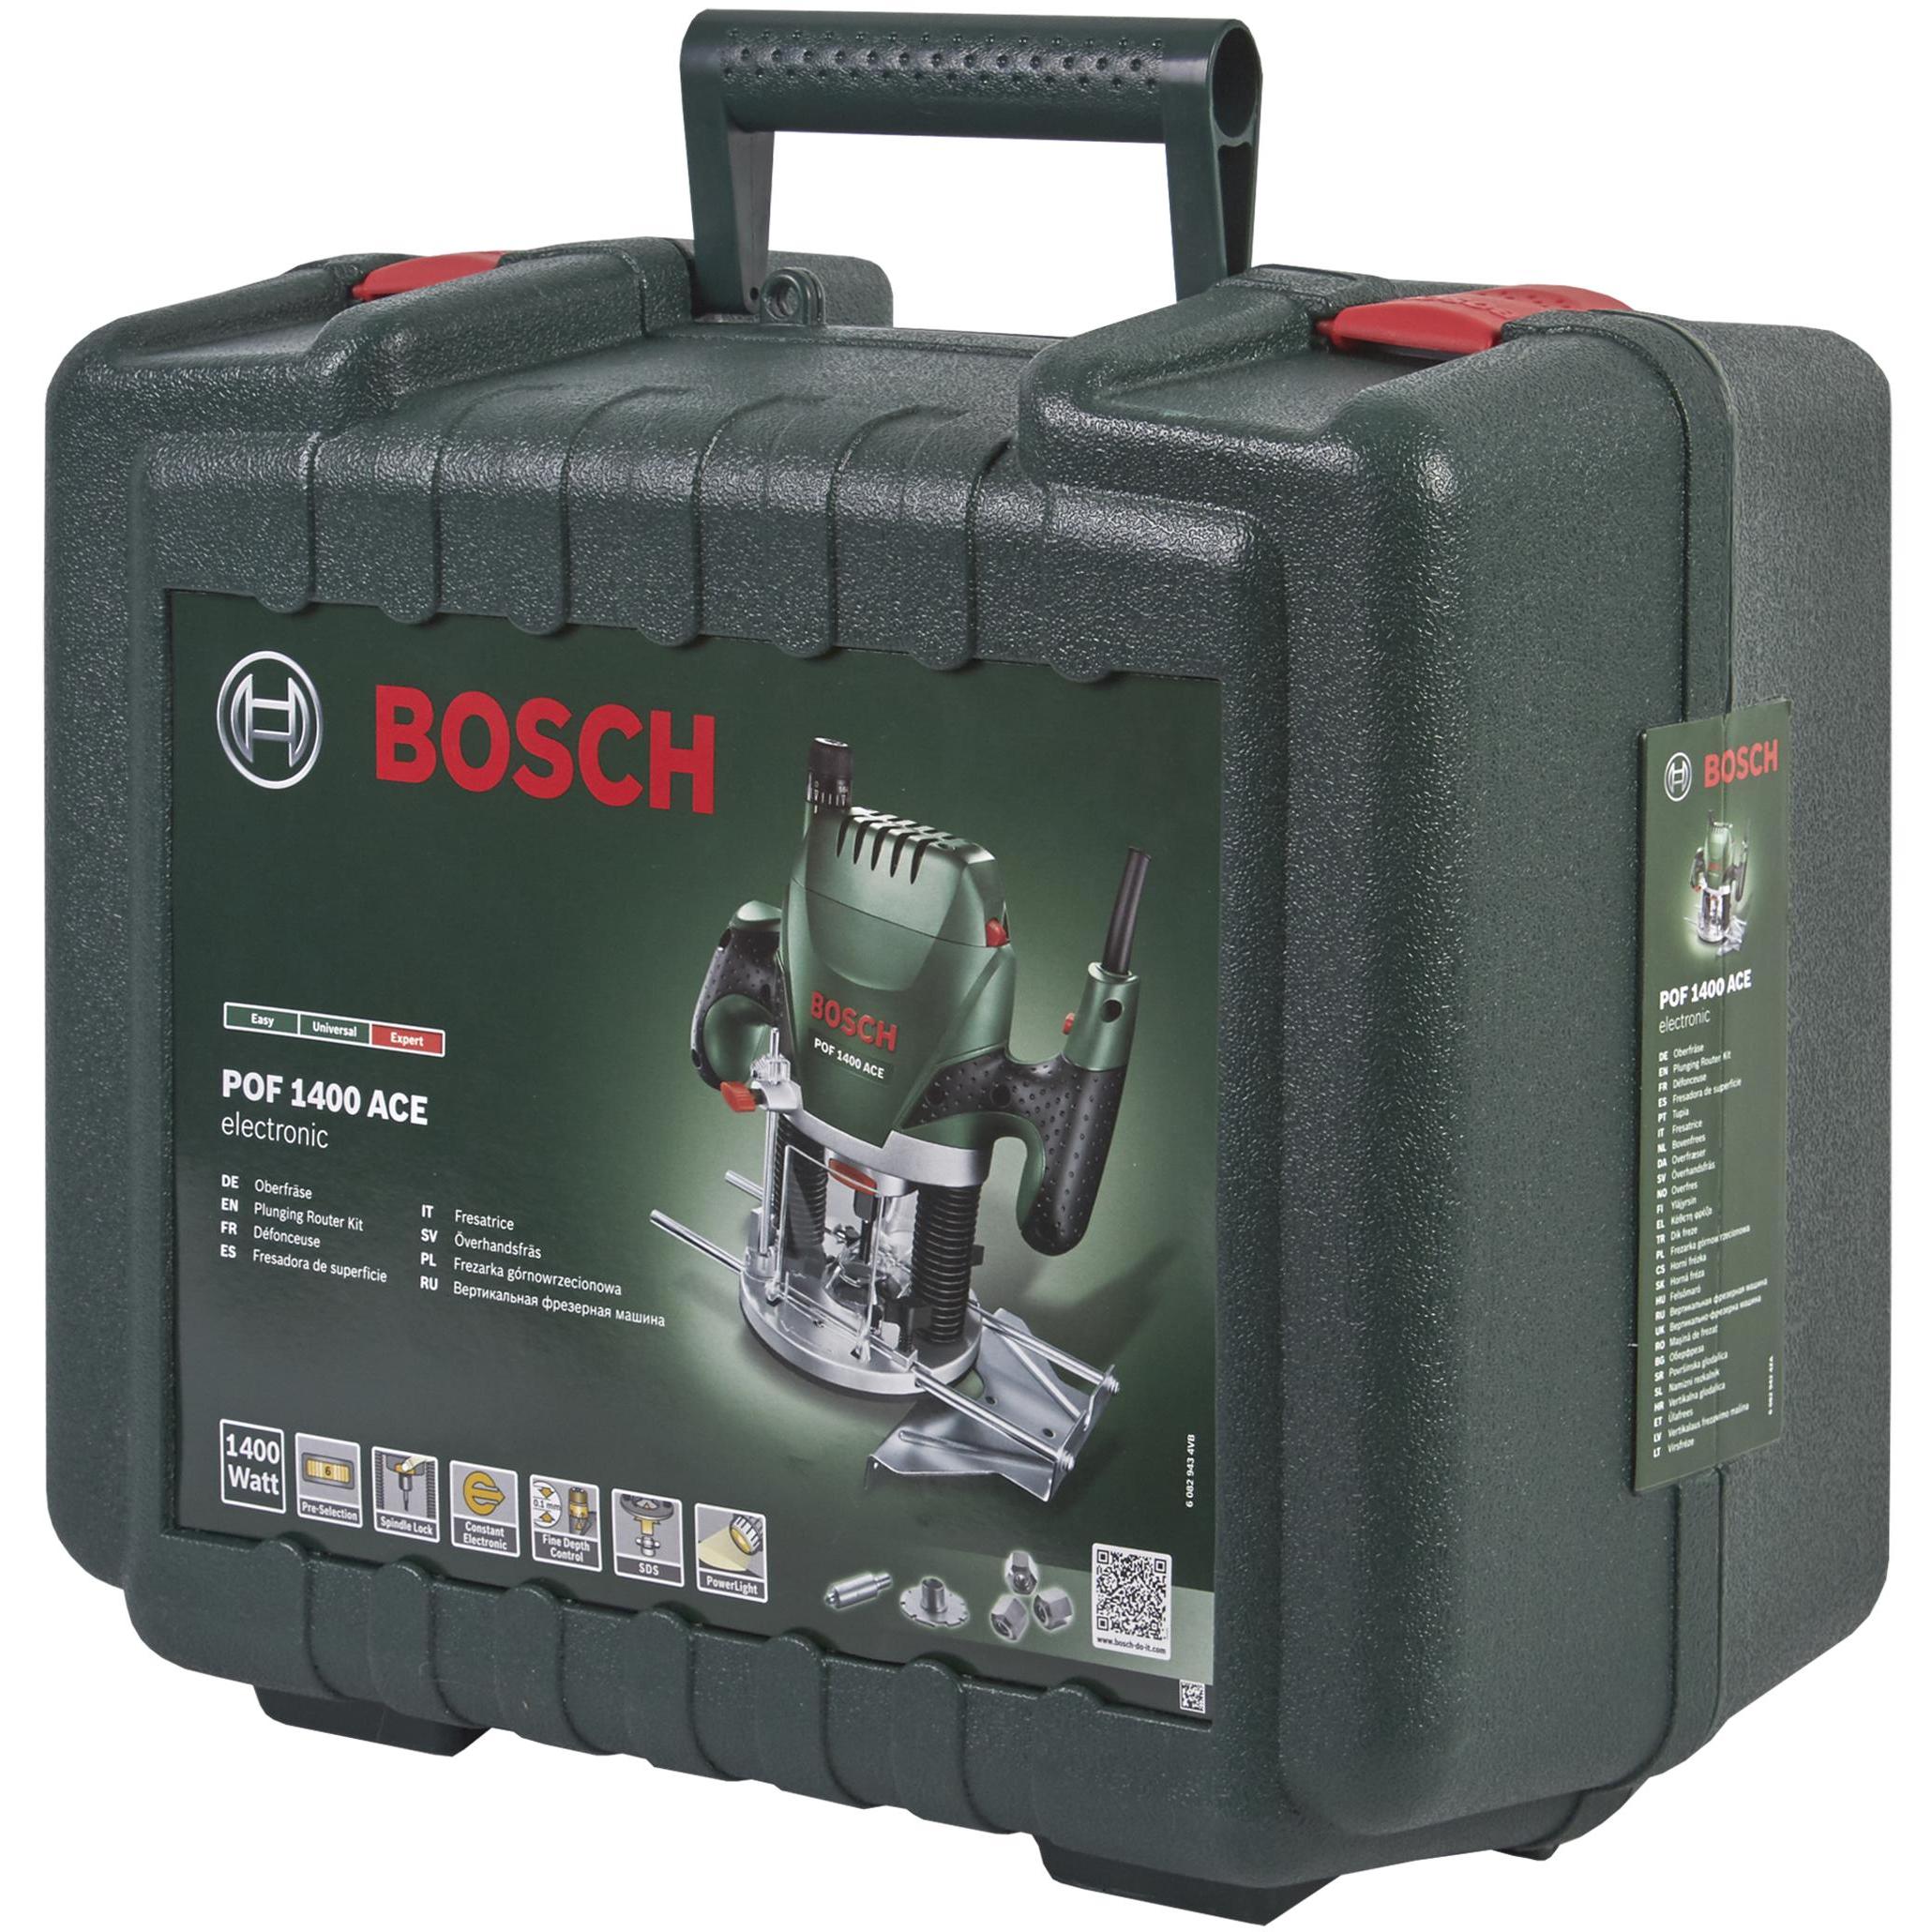 Фрезер Bosch POF 1400 Ace